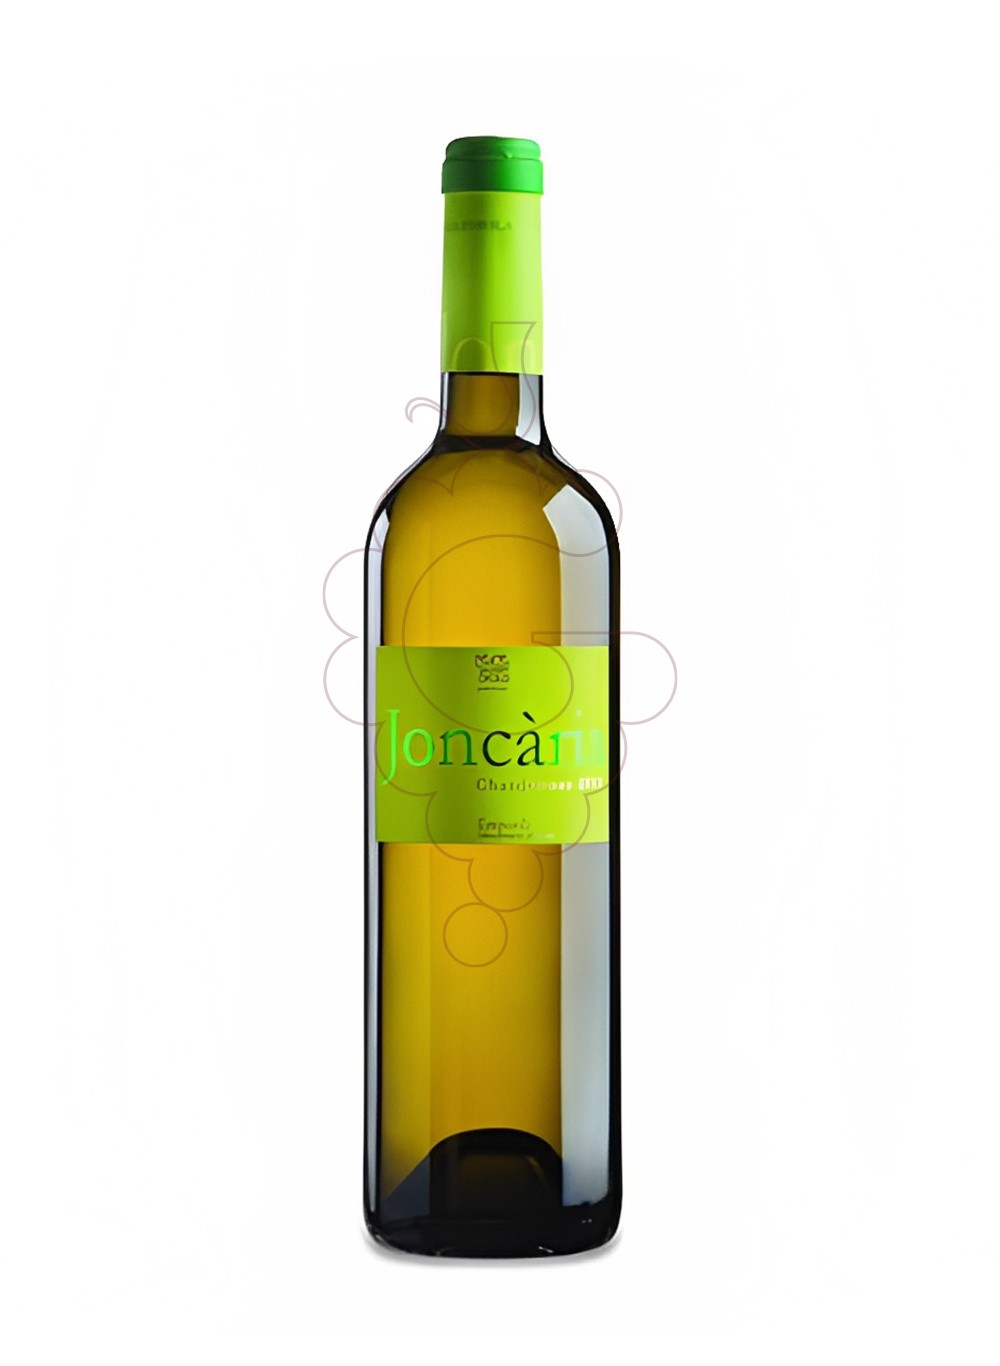 Photo Joncaria blanc chardonnay white wine